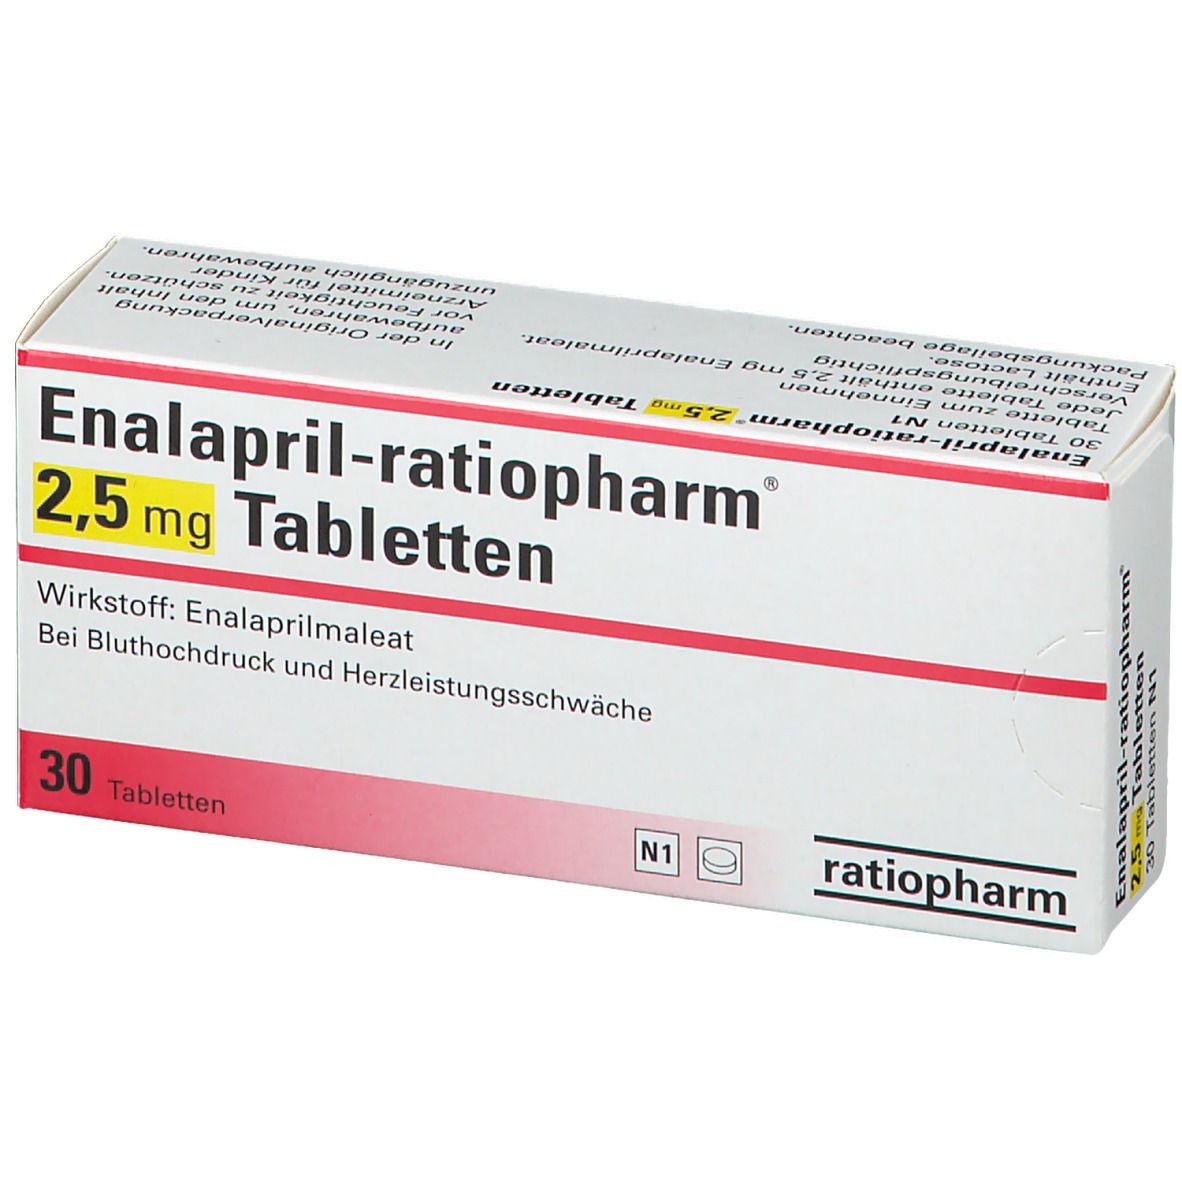 Enalapril-ratiopharm® 2,5 mg